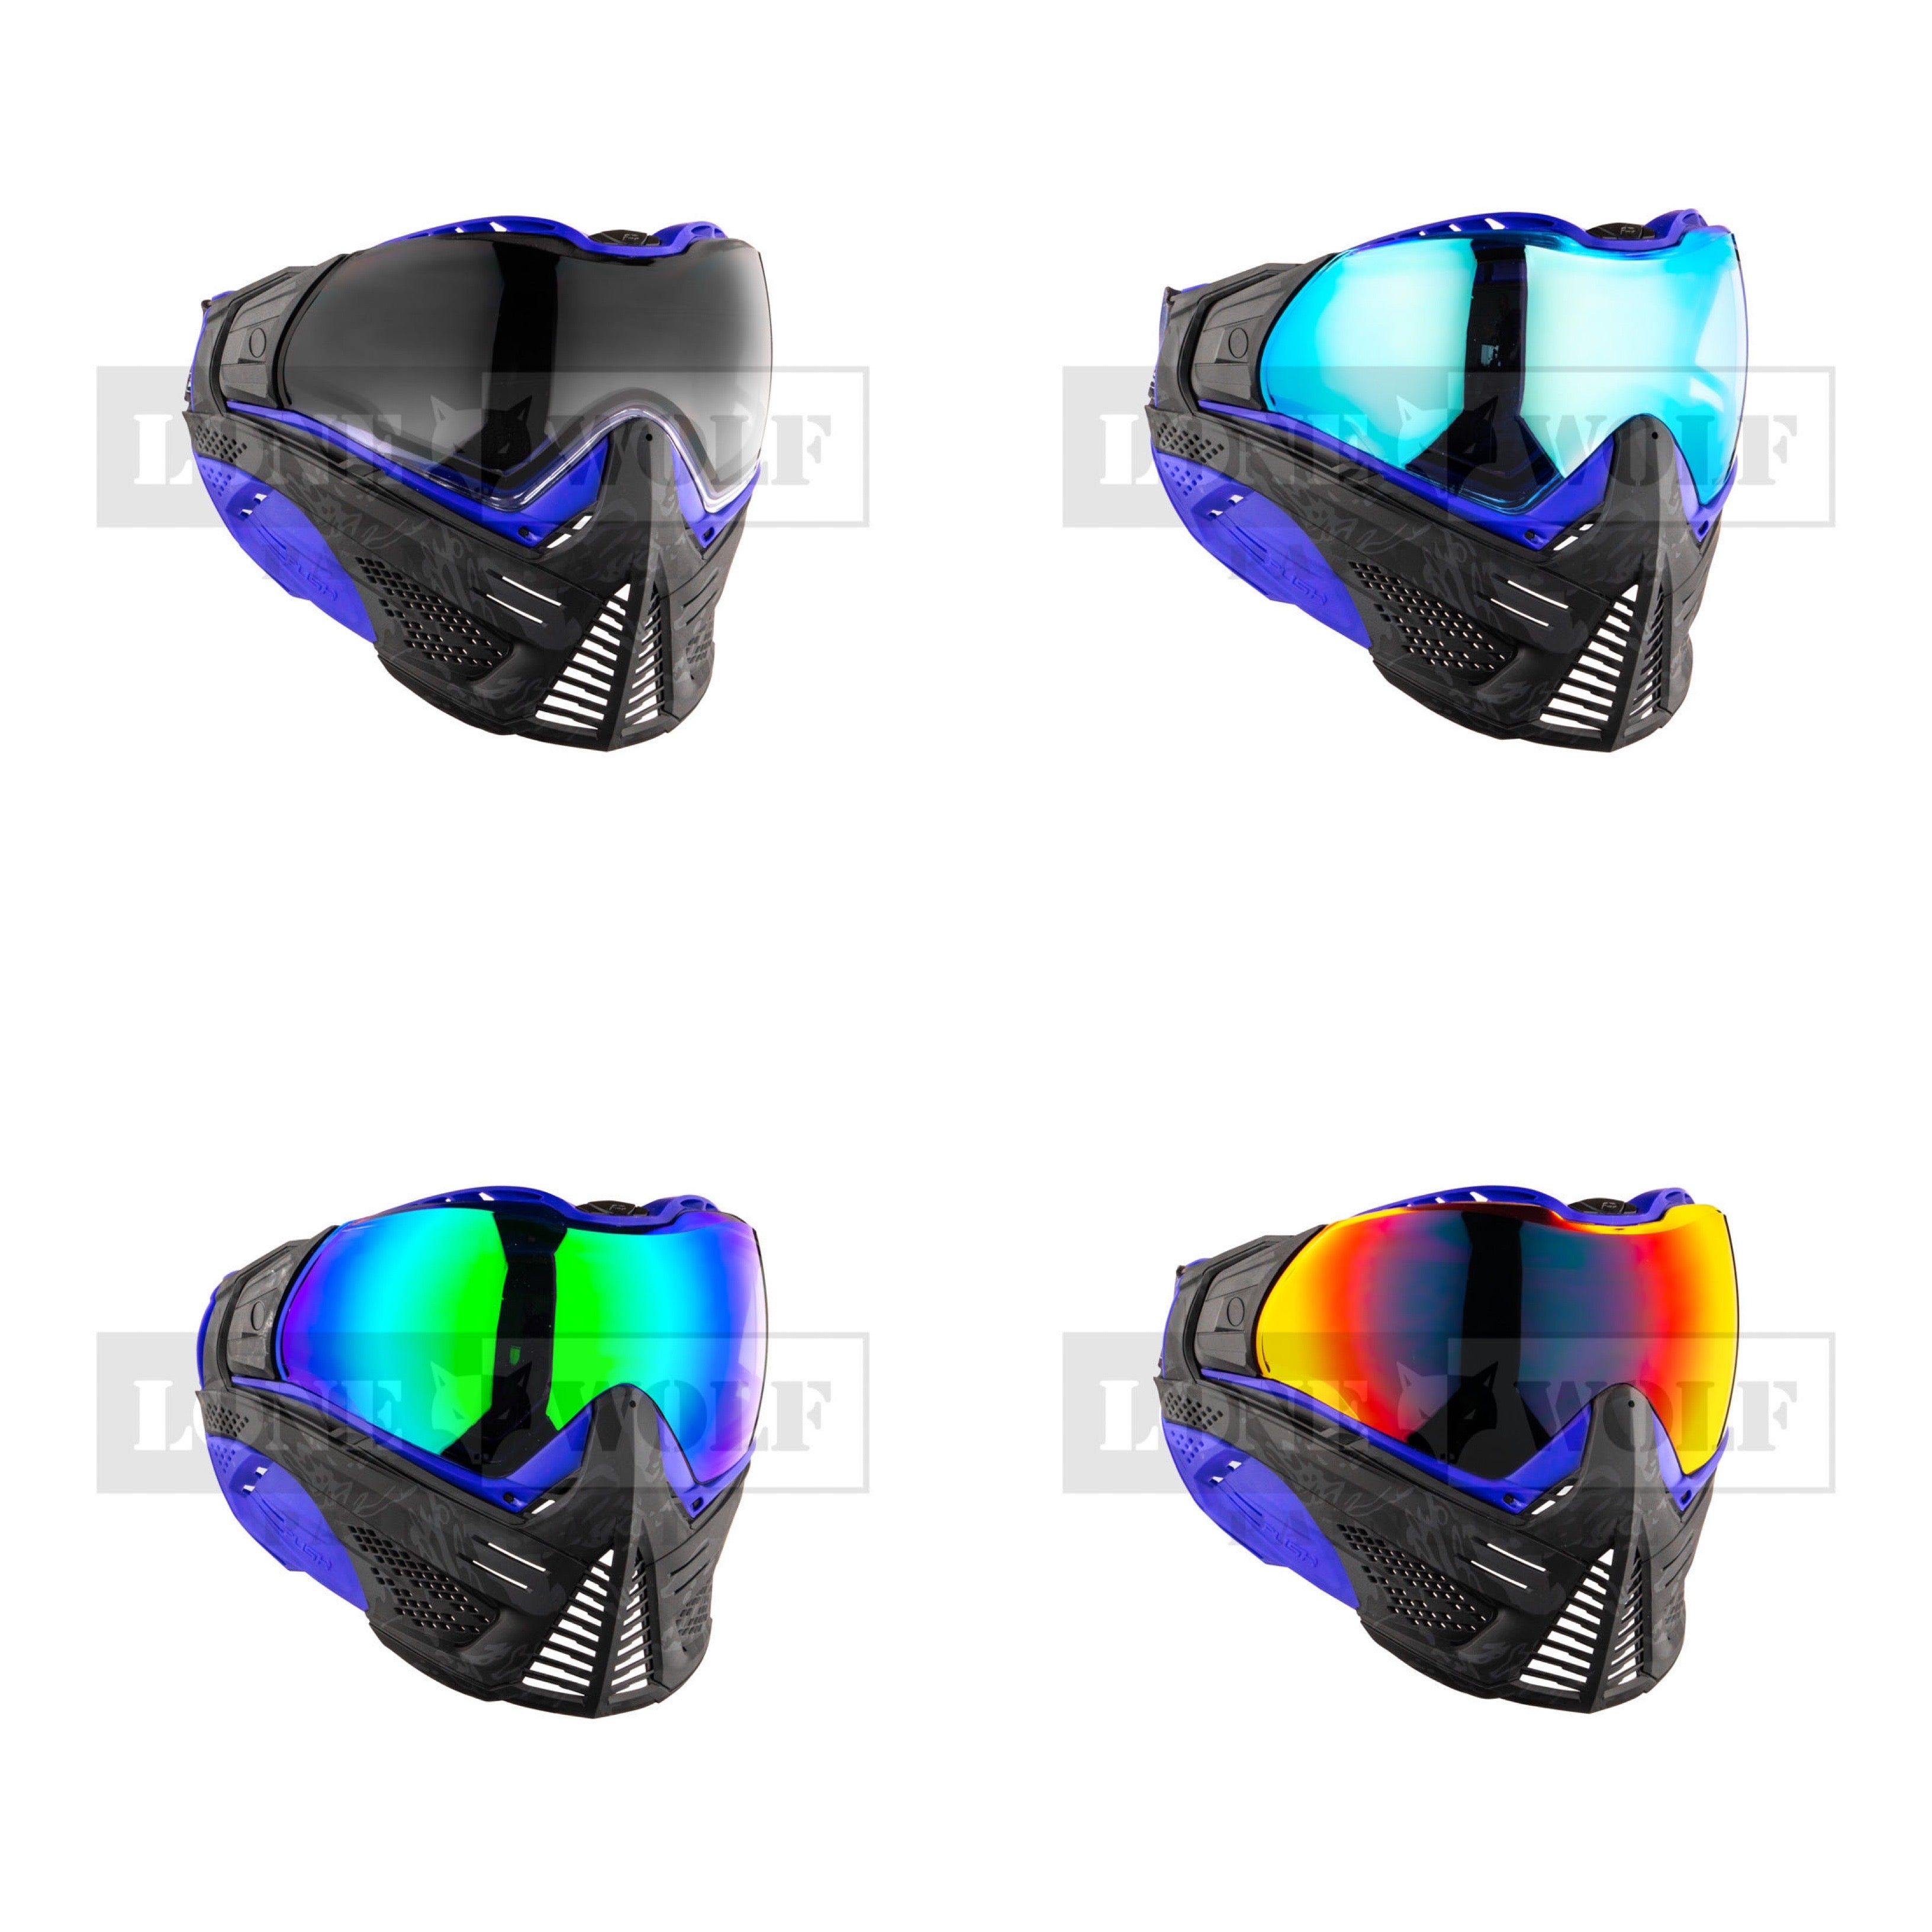 dye i5 ペイントボールマスク - スキー・スノーボードアクセサリー